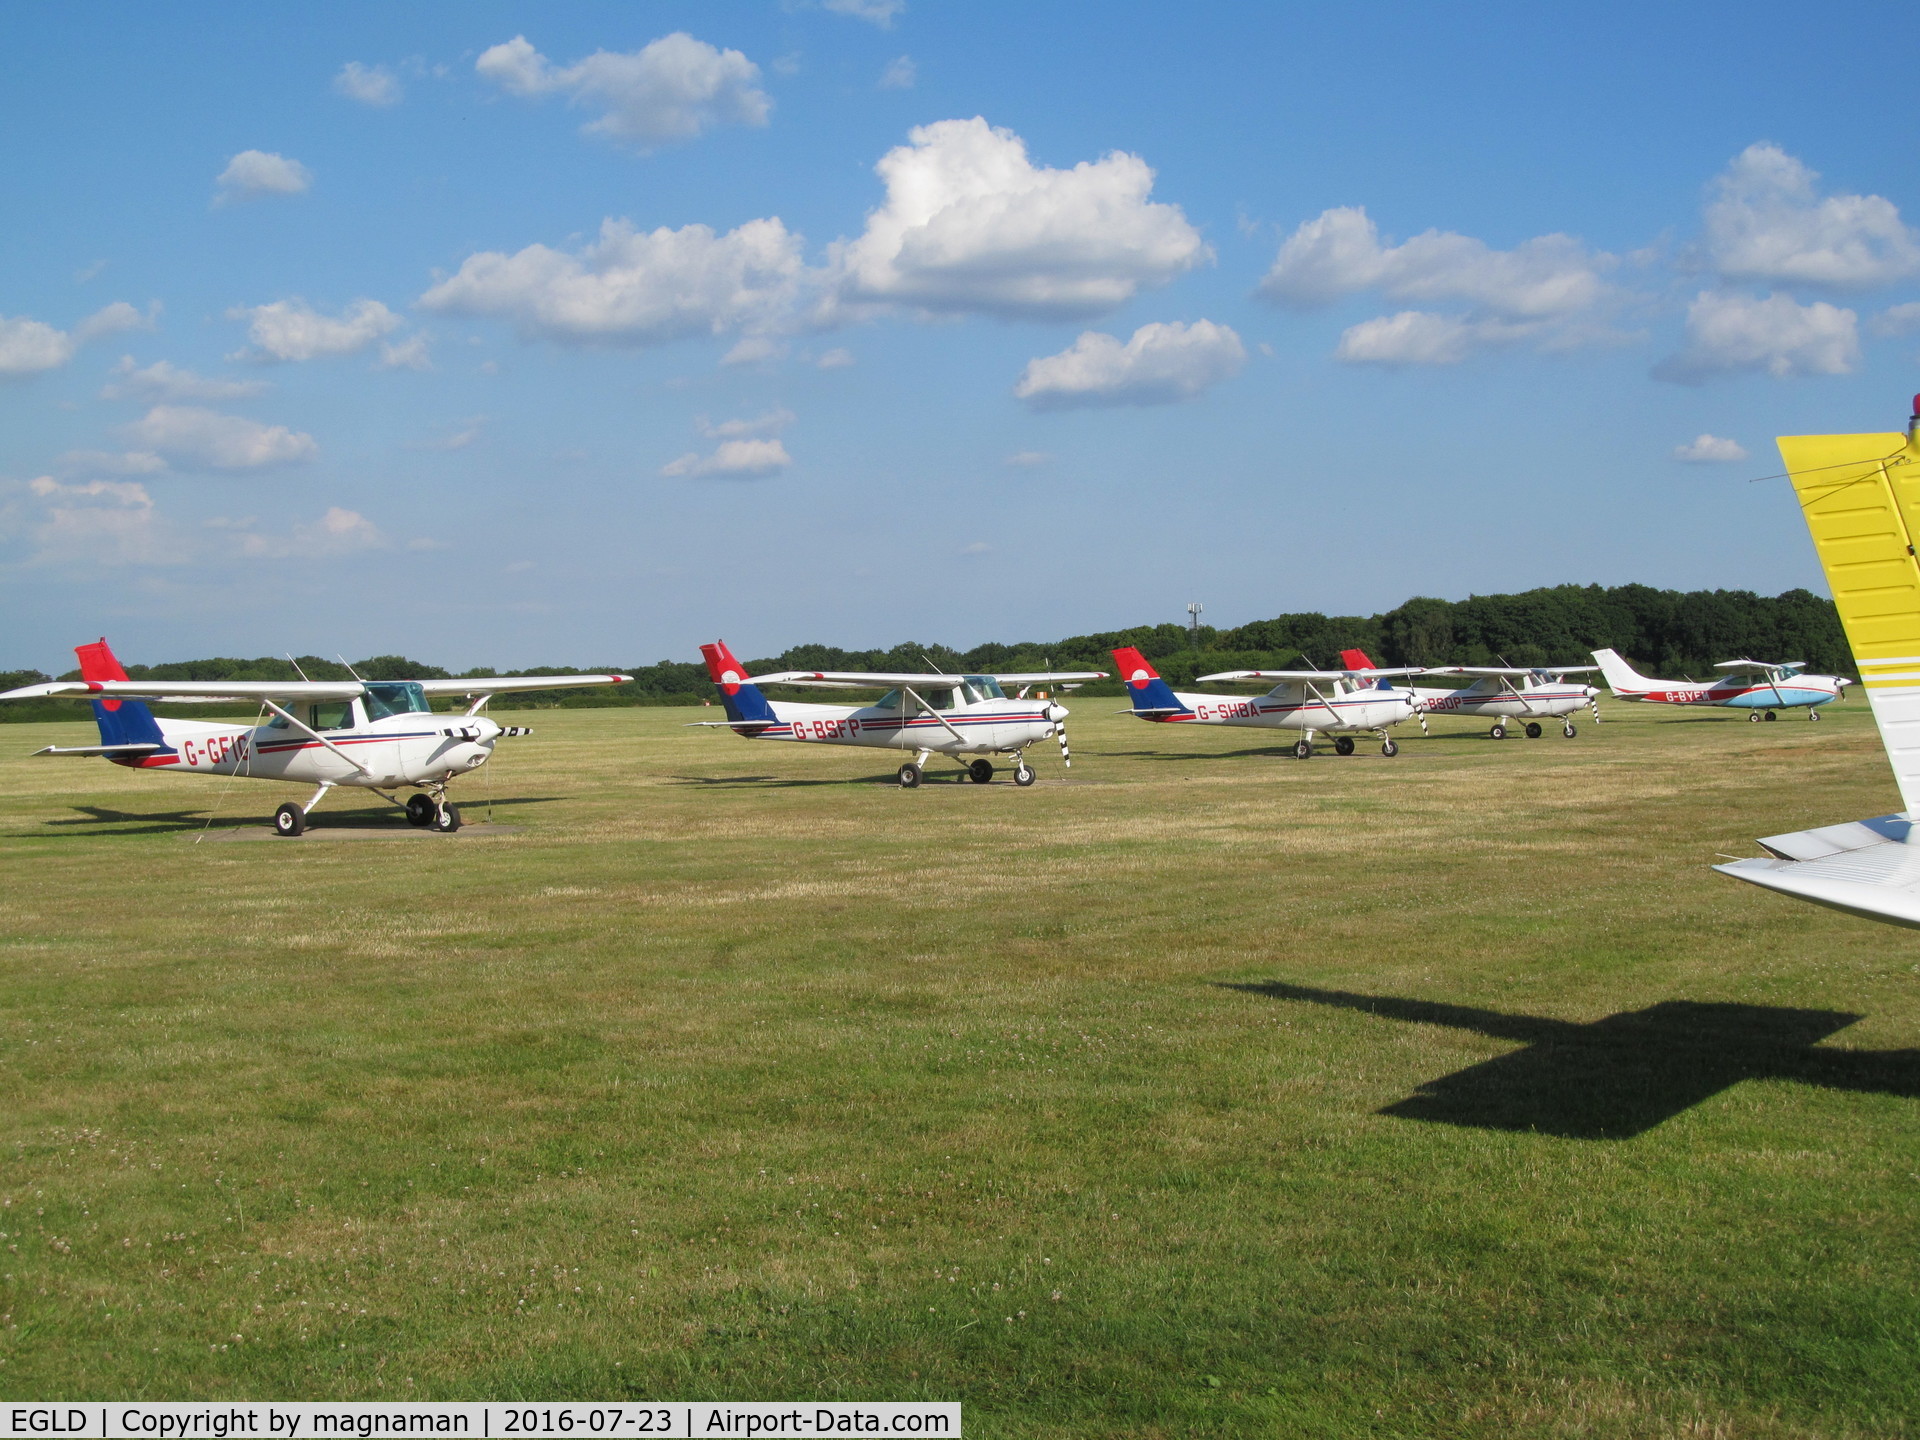 Denham Aerodrome Airport, Gerrards Cross, England United Kingdom (EGLD) - G-GFIG AND FLYING CLUB PALS